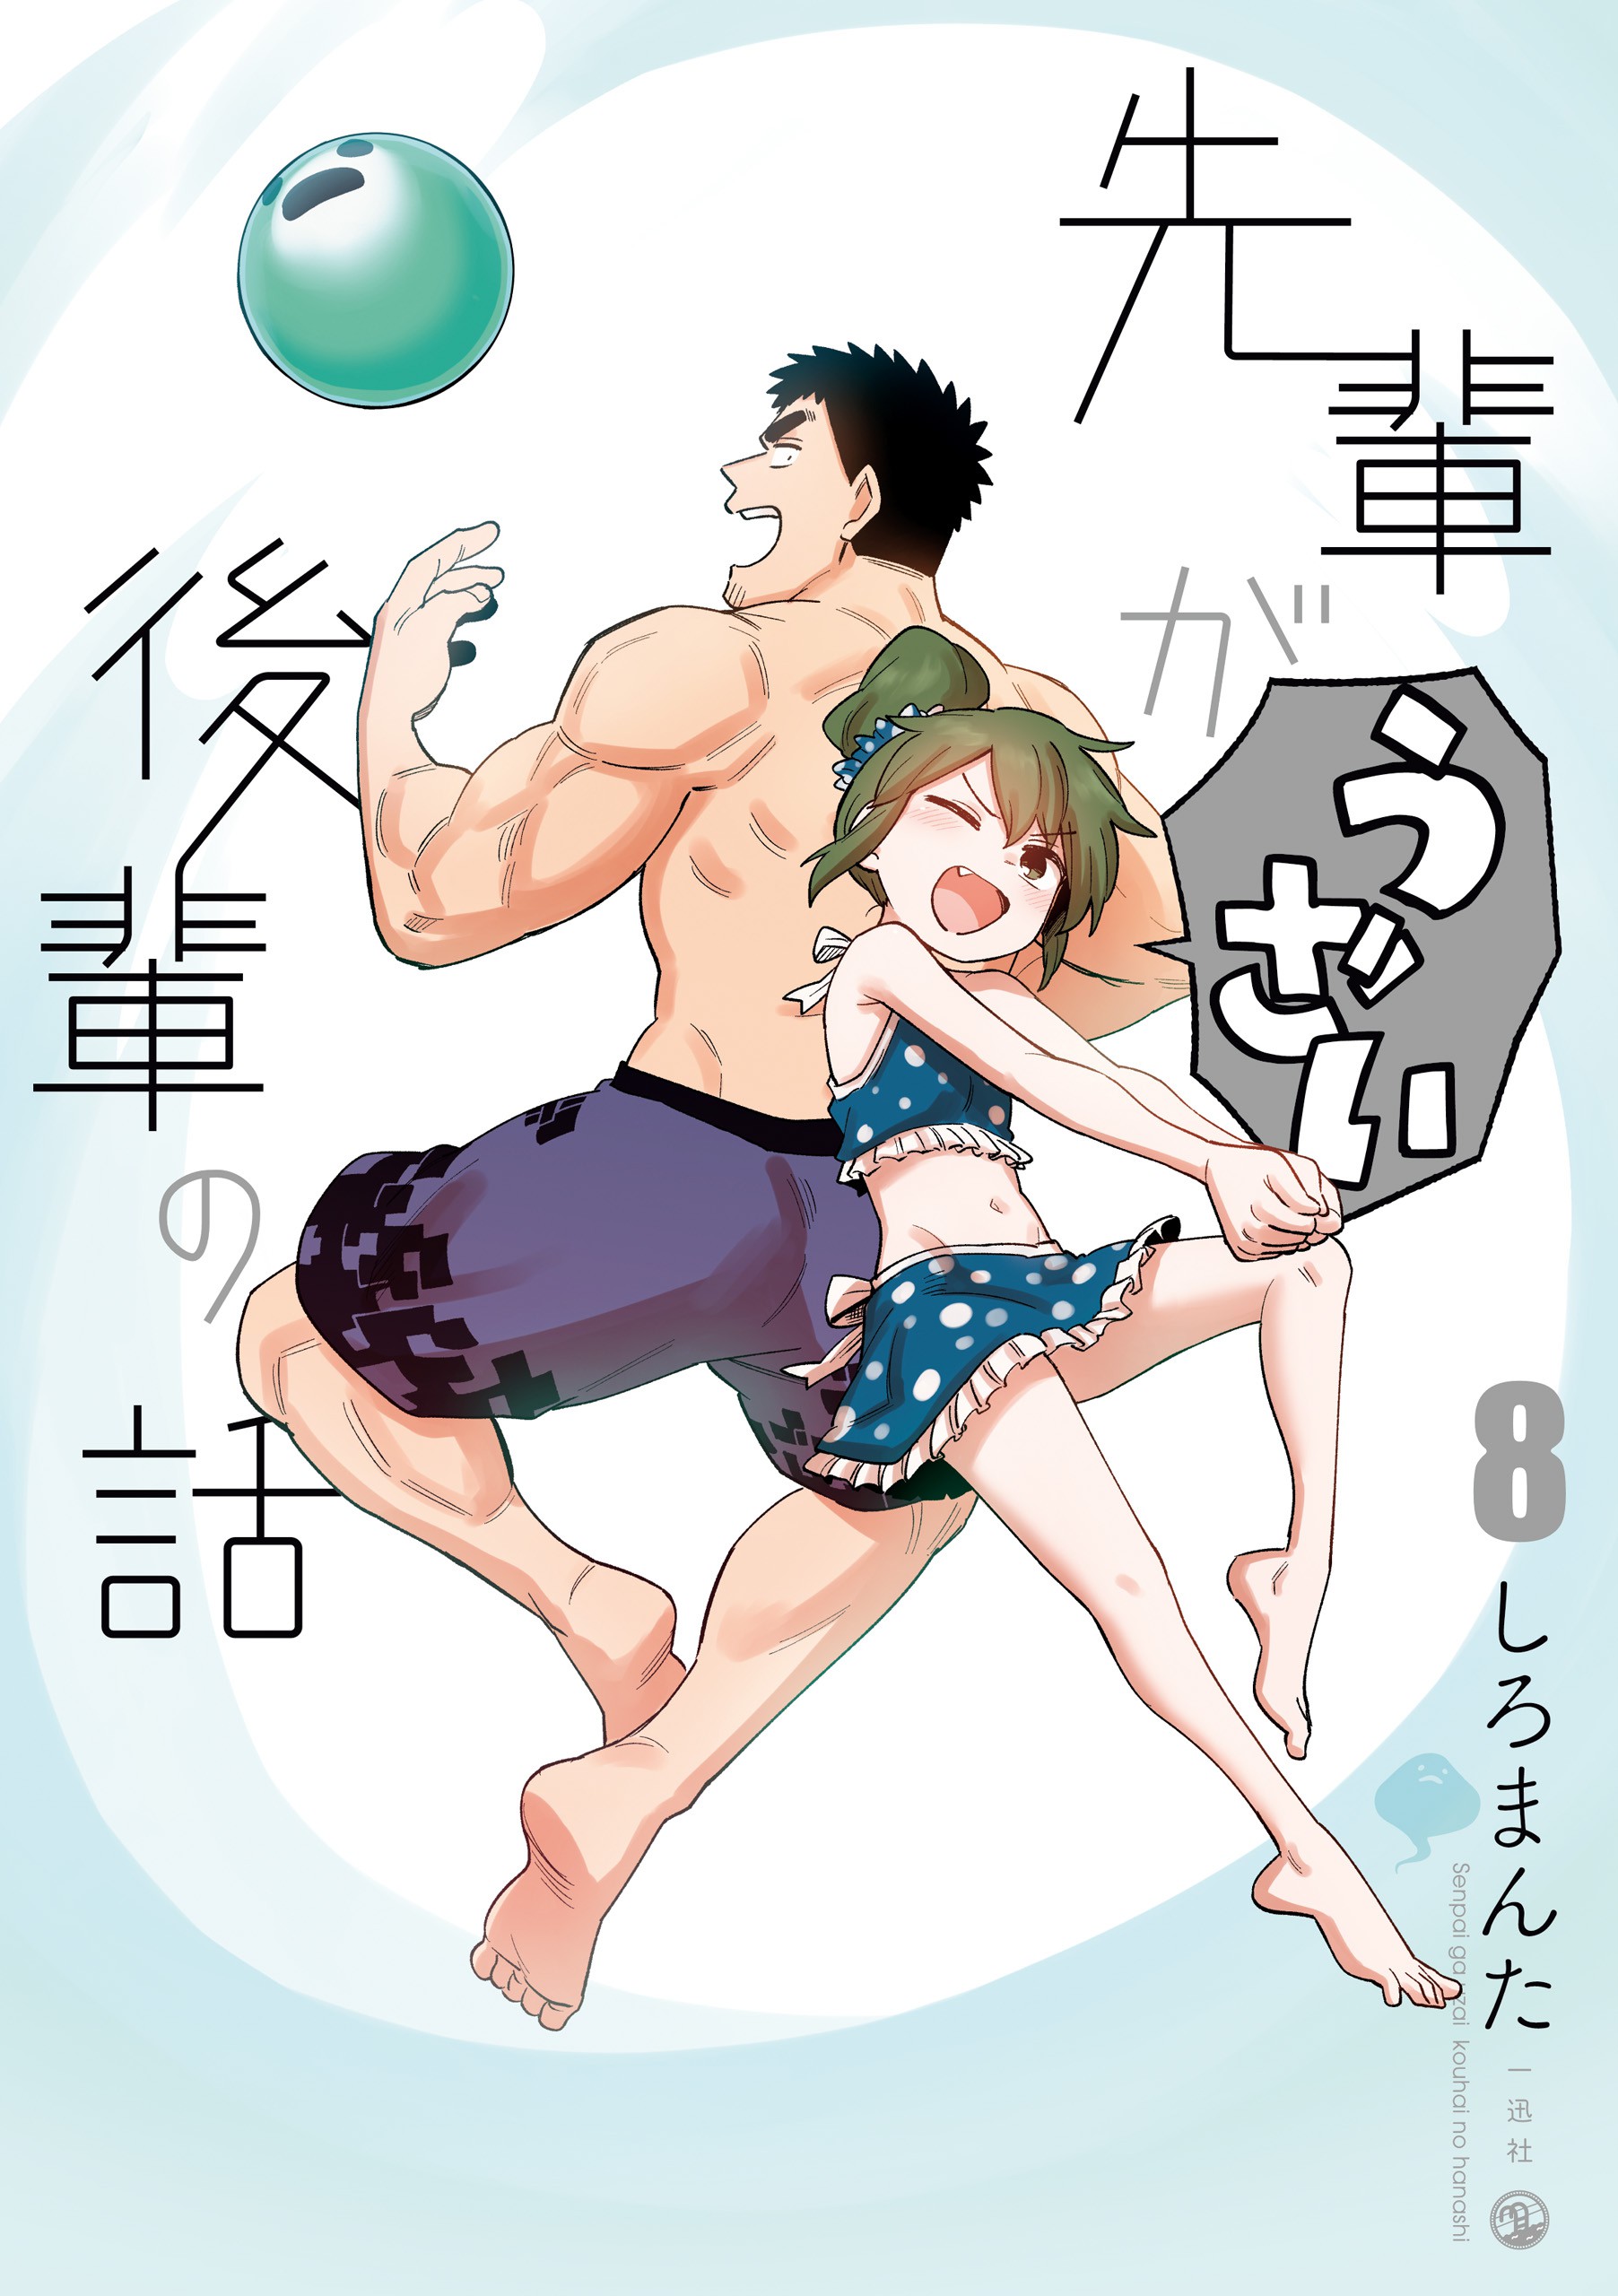 Read Senpai ga Uzai Kouhai no Hanashi Manga English [New Chapters] Online  Free - MangaClash